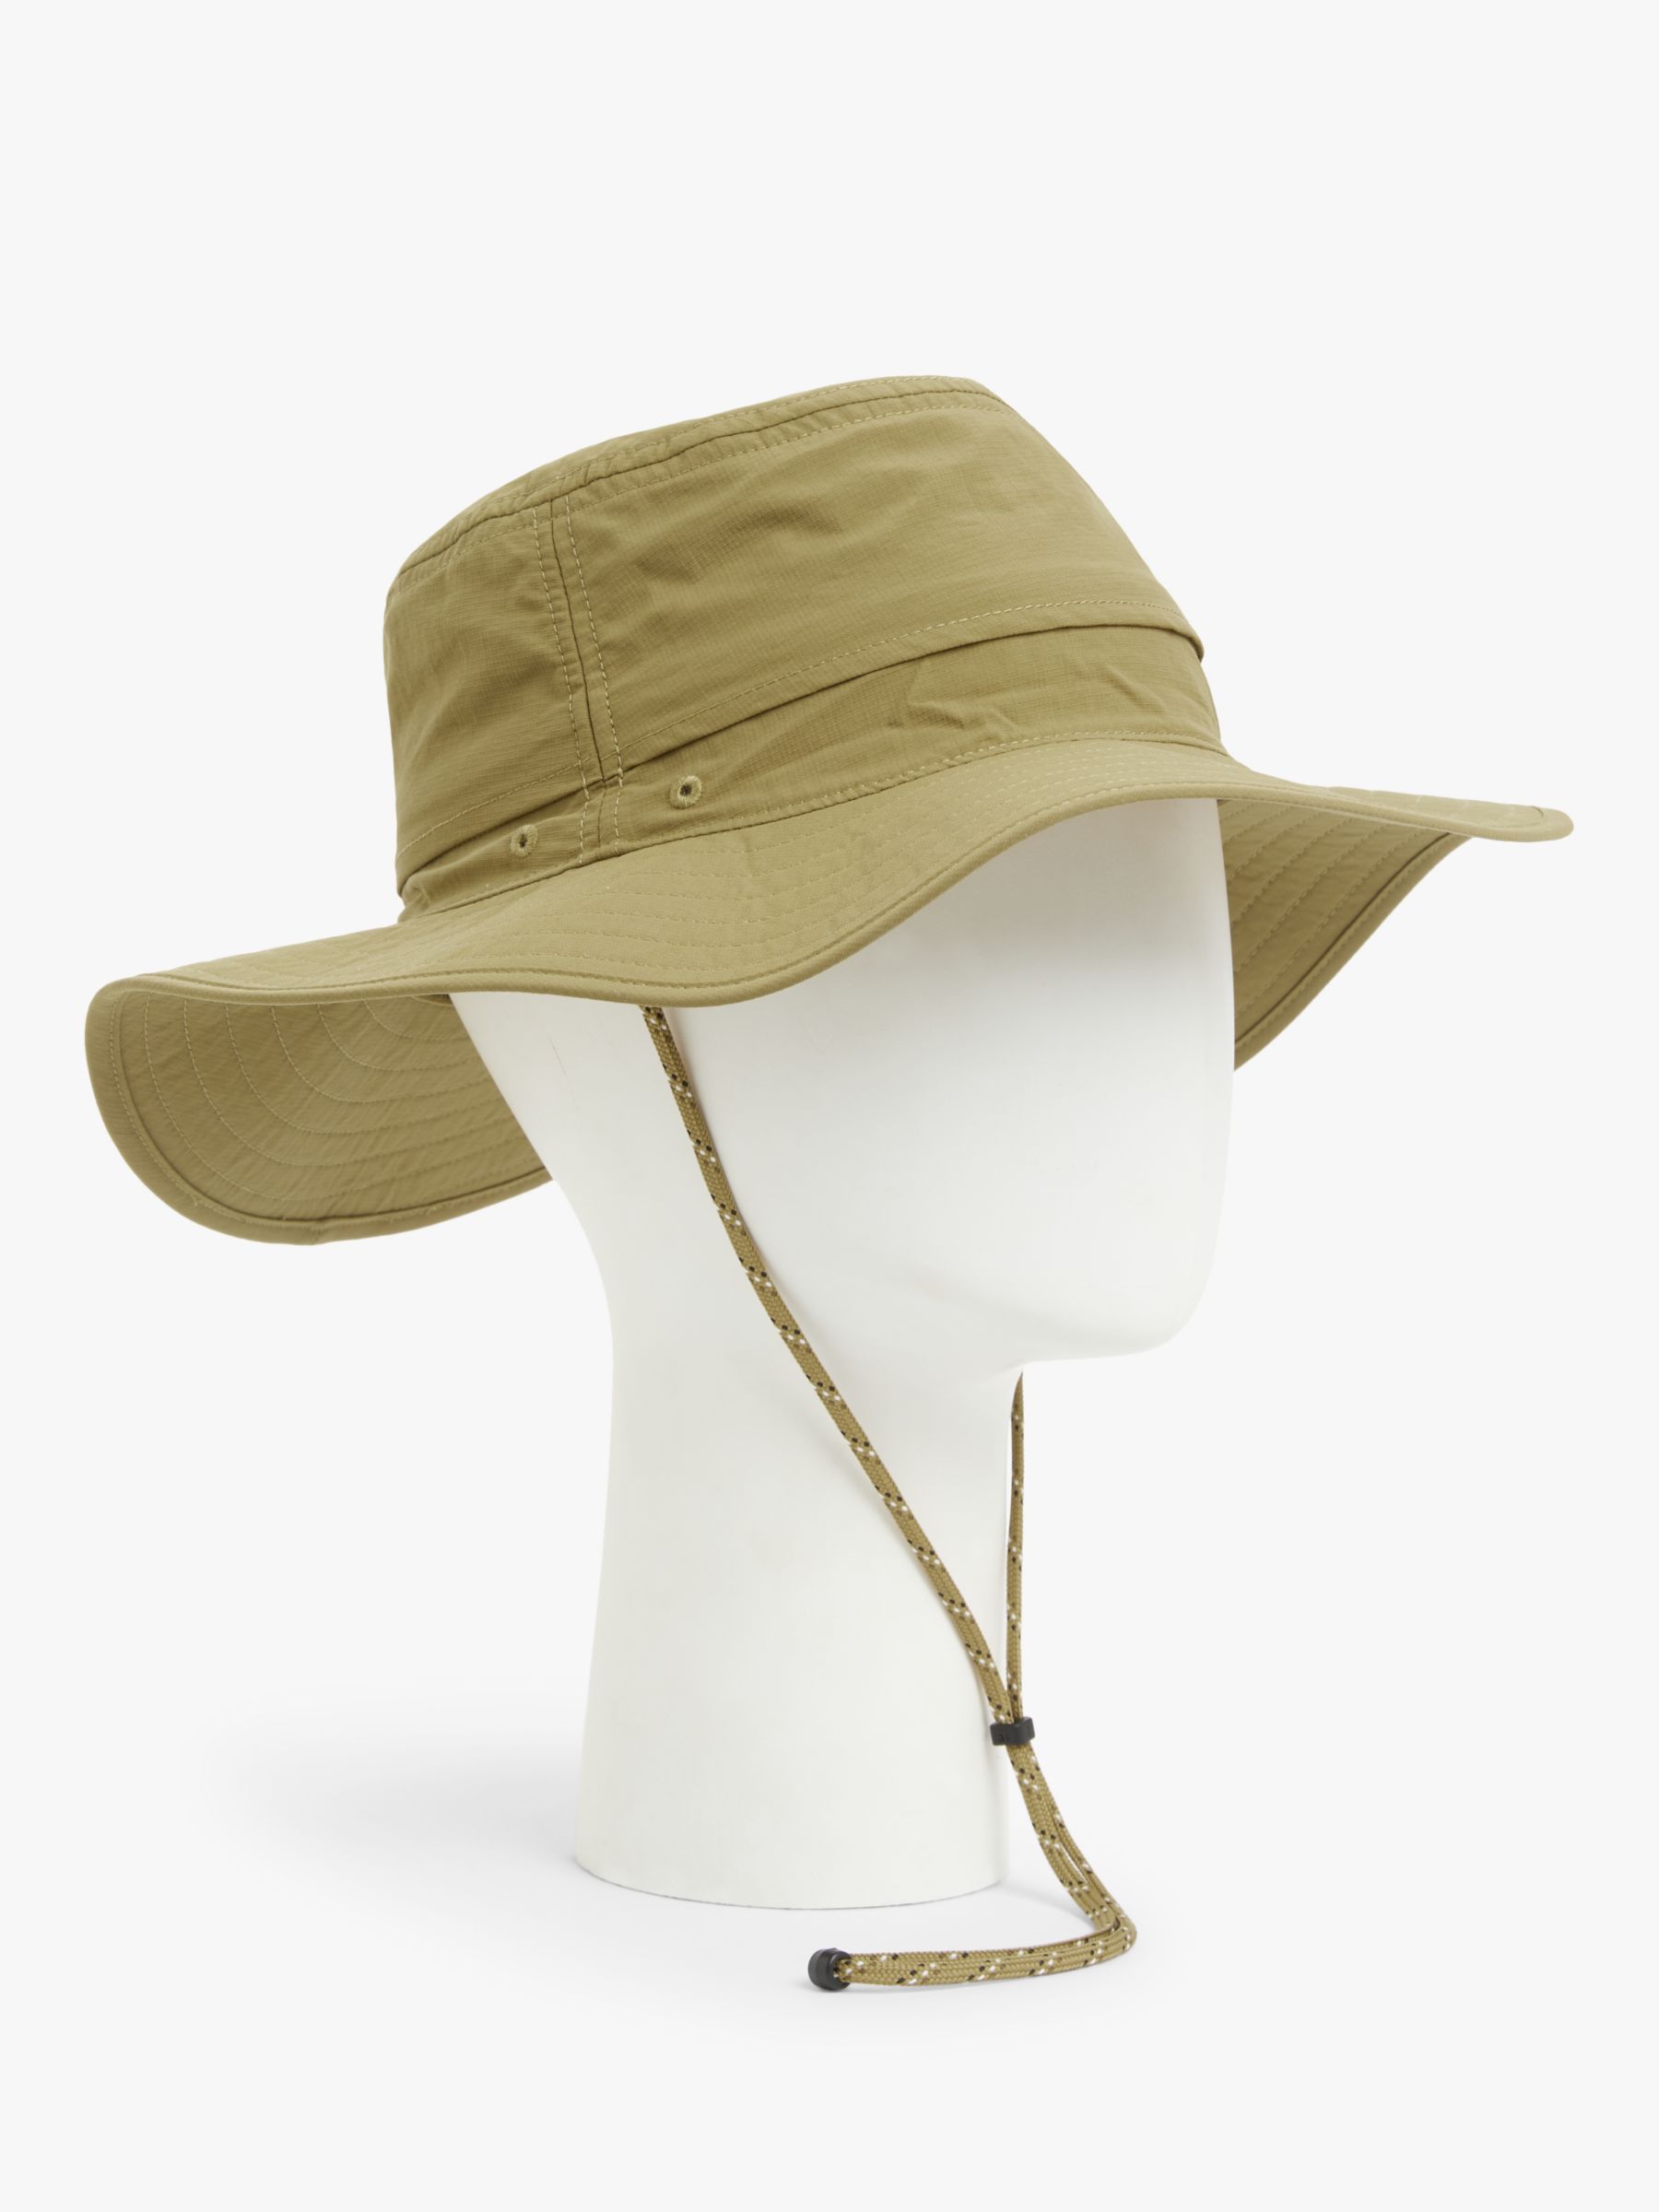 The North Face Horizon Breeze Summer Hat, Khaki at John Lewis & Partners